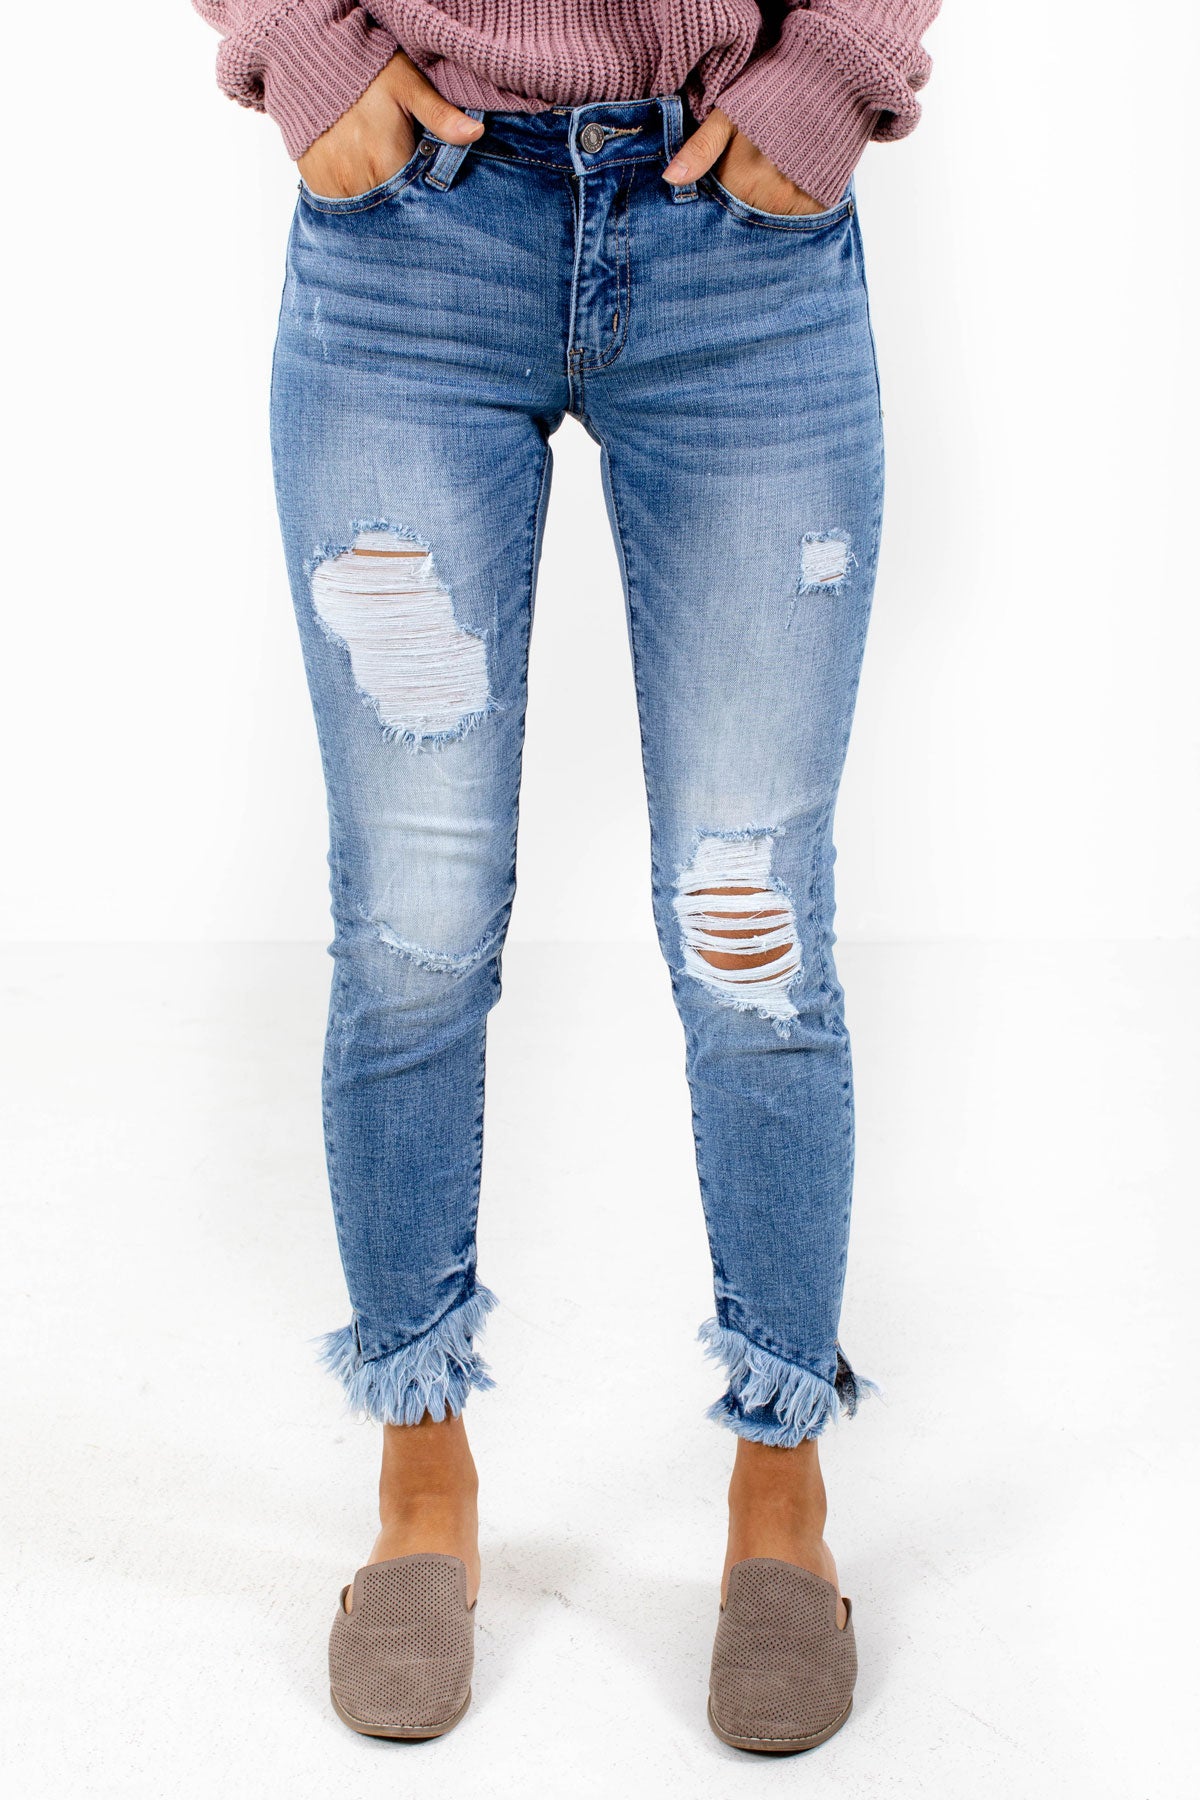 women's distressed denim jeans